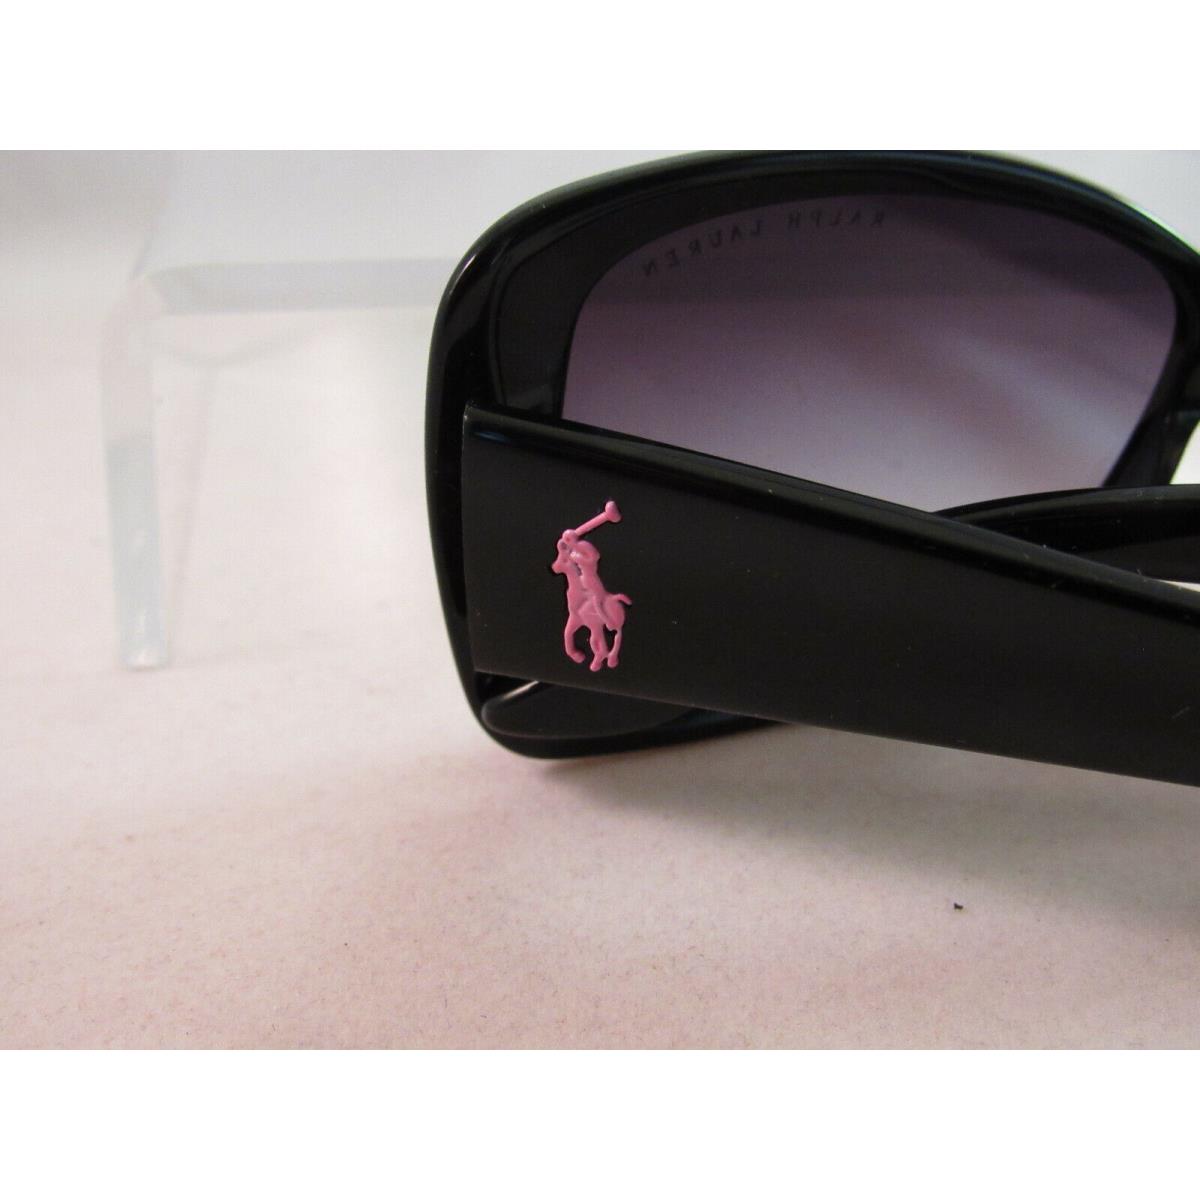 Ralph Lauren sunglasses  - Black Frame, Gray to almost purple Lens